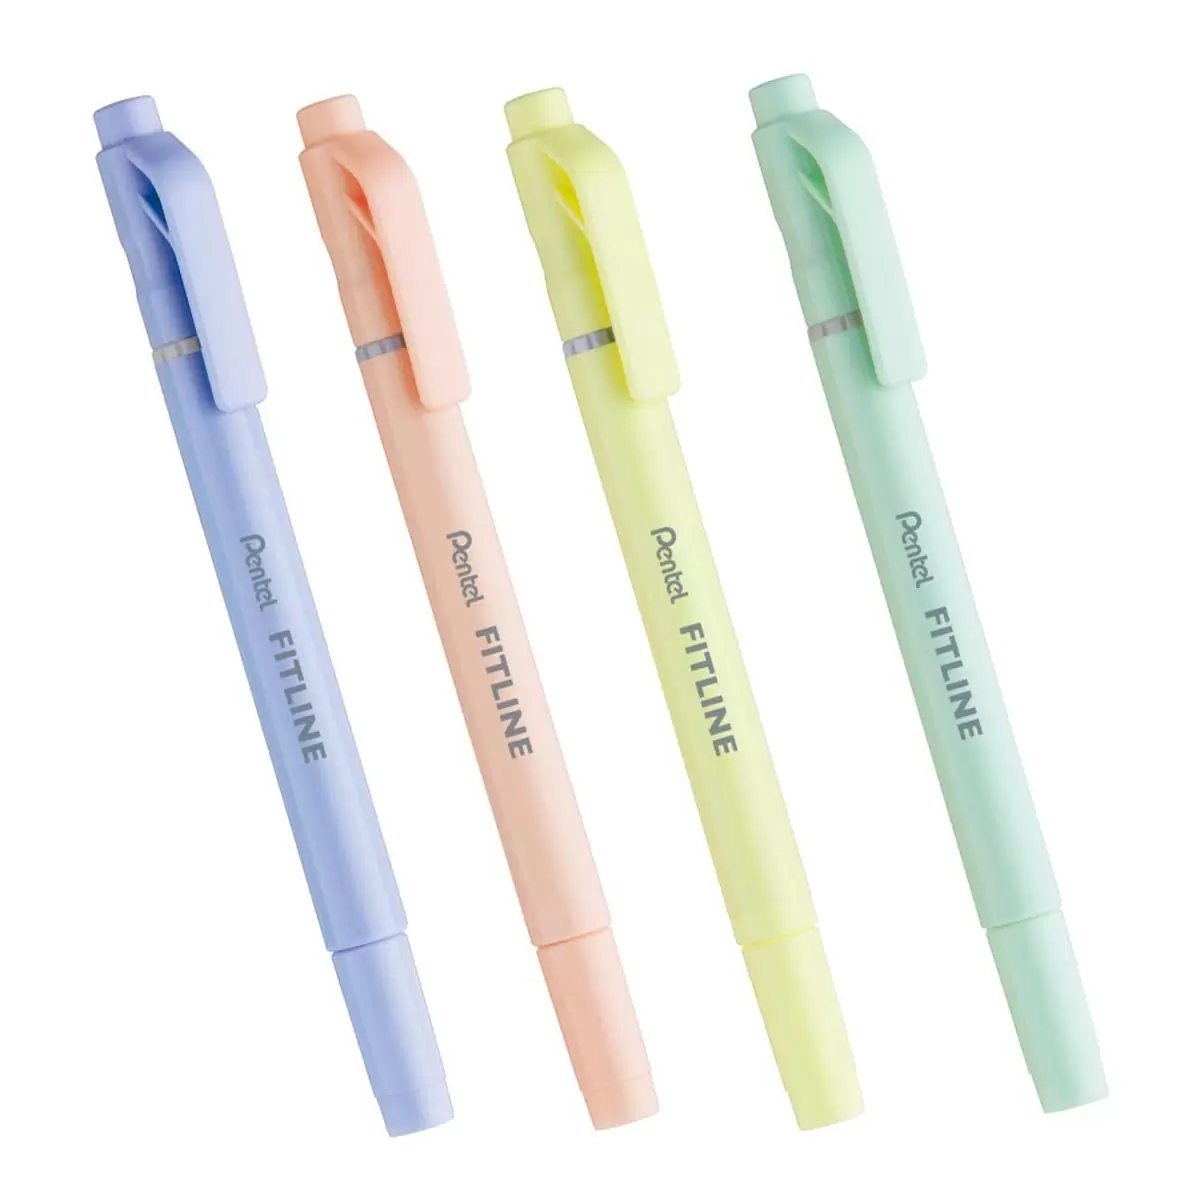 Pentel Fitline 雙頭螢光筆 20入裝 粉彩藍 + 粉彩橘 + 粉彩黃 + 粉彩綠